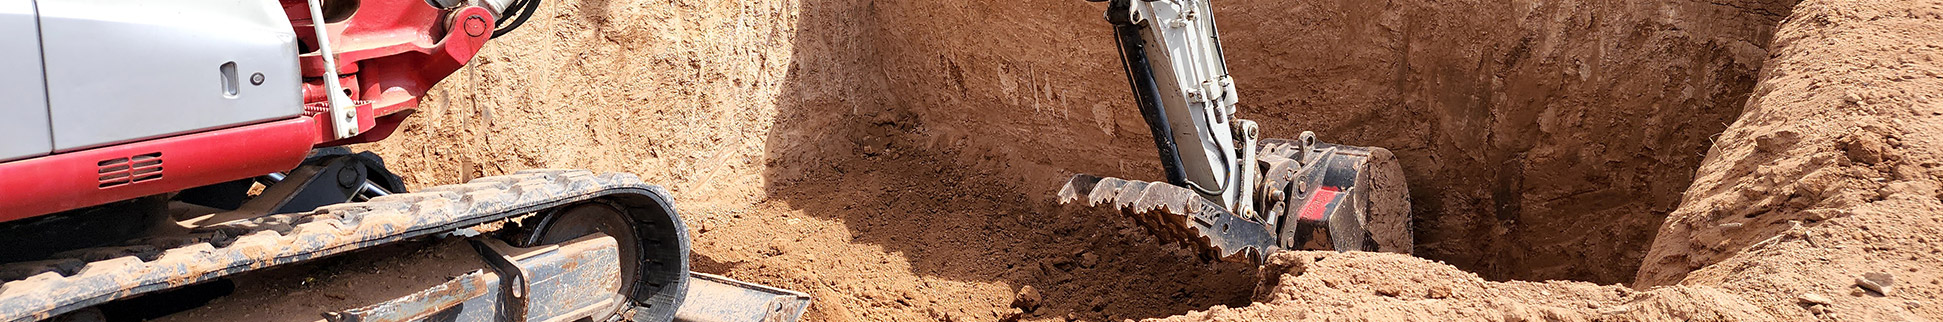 Basement digging in Phoenix, Arizona